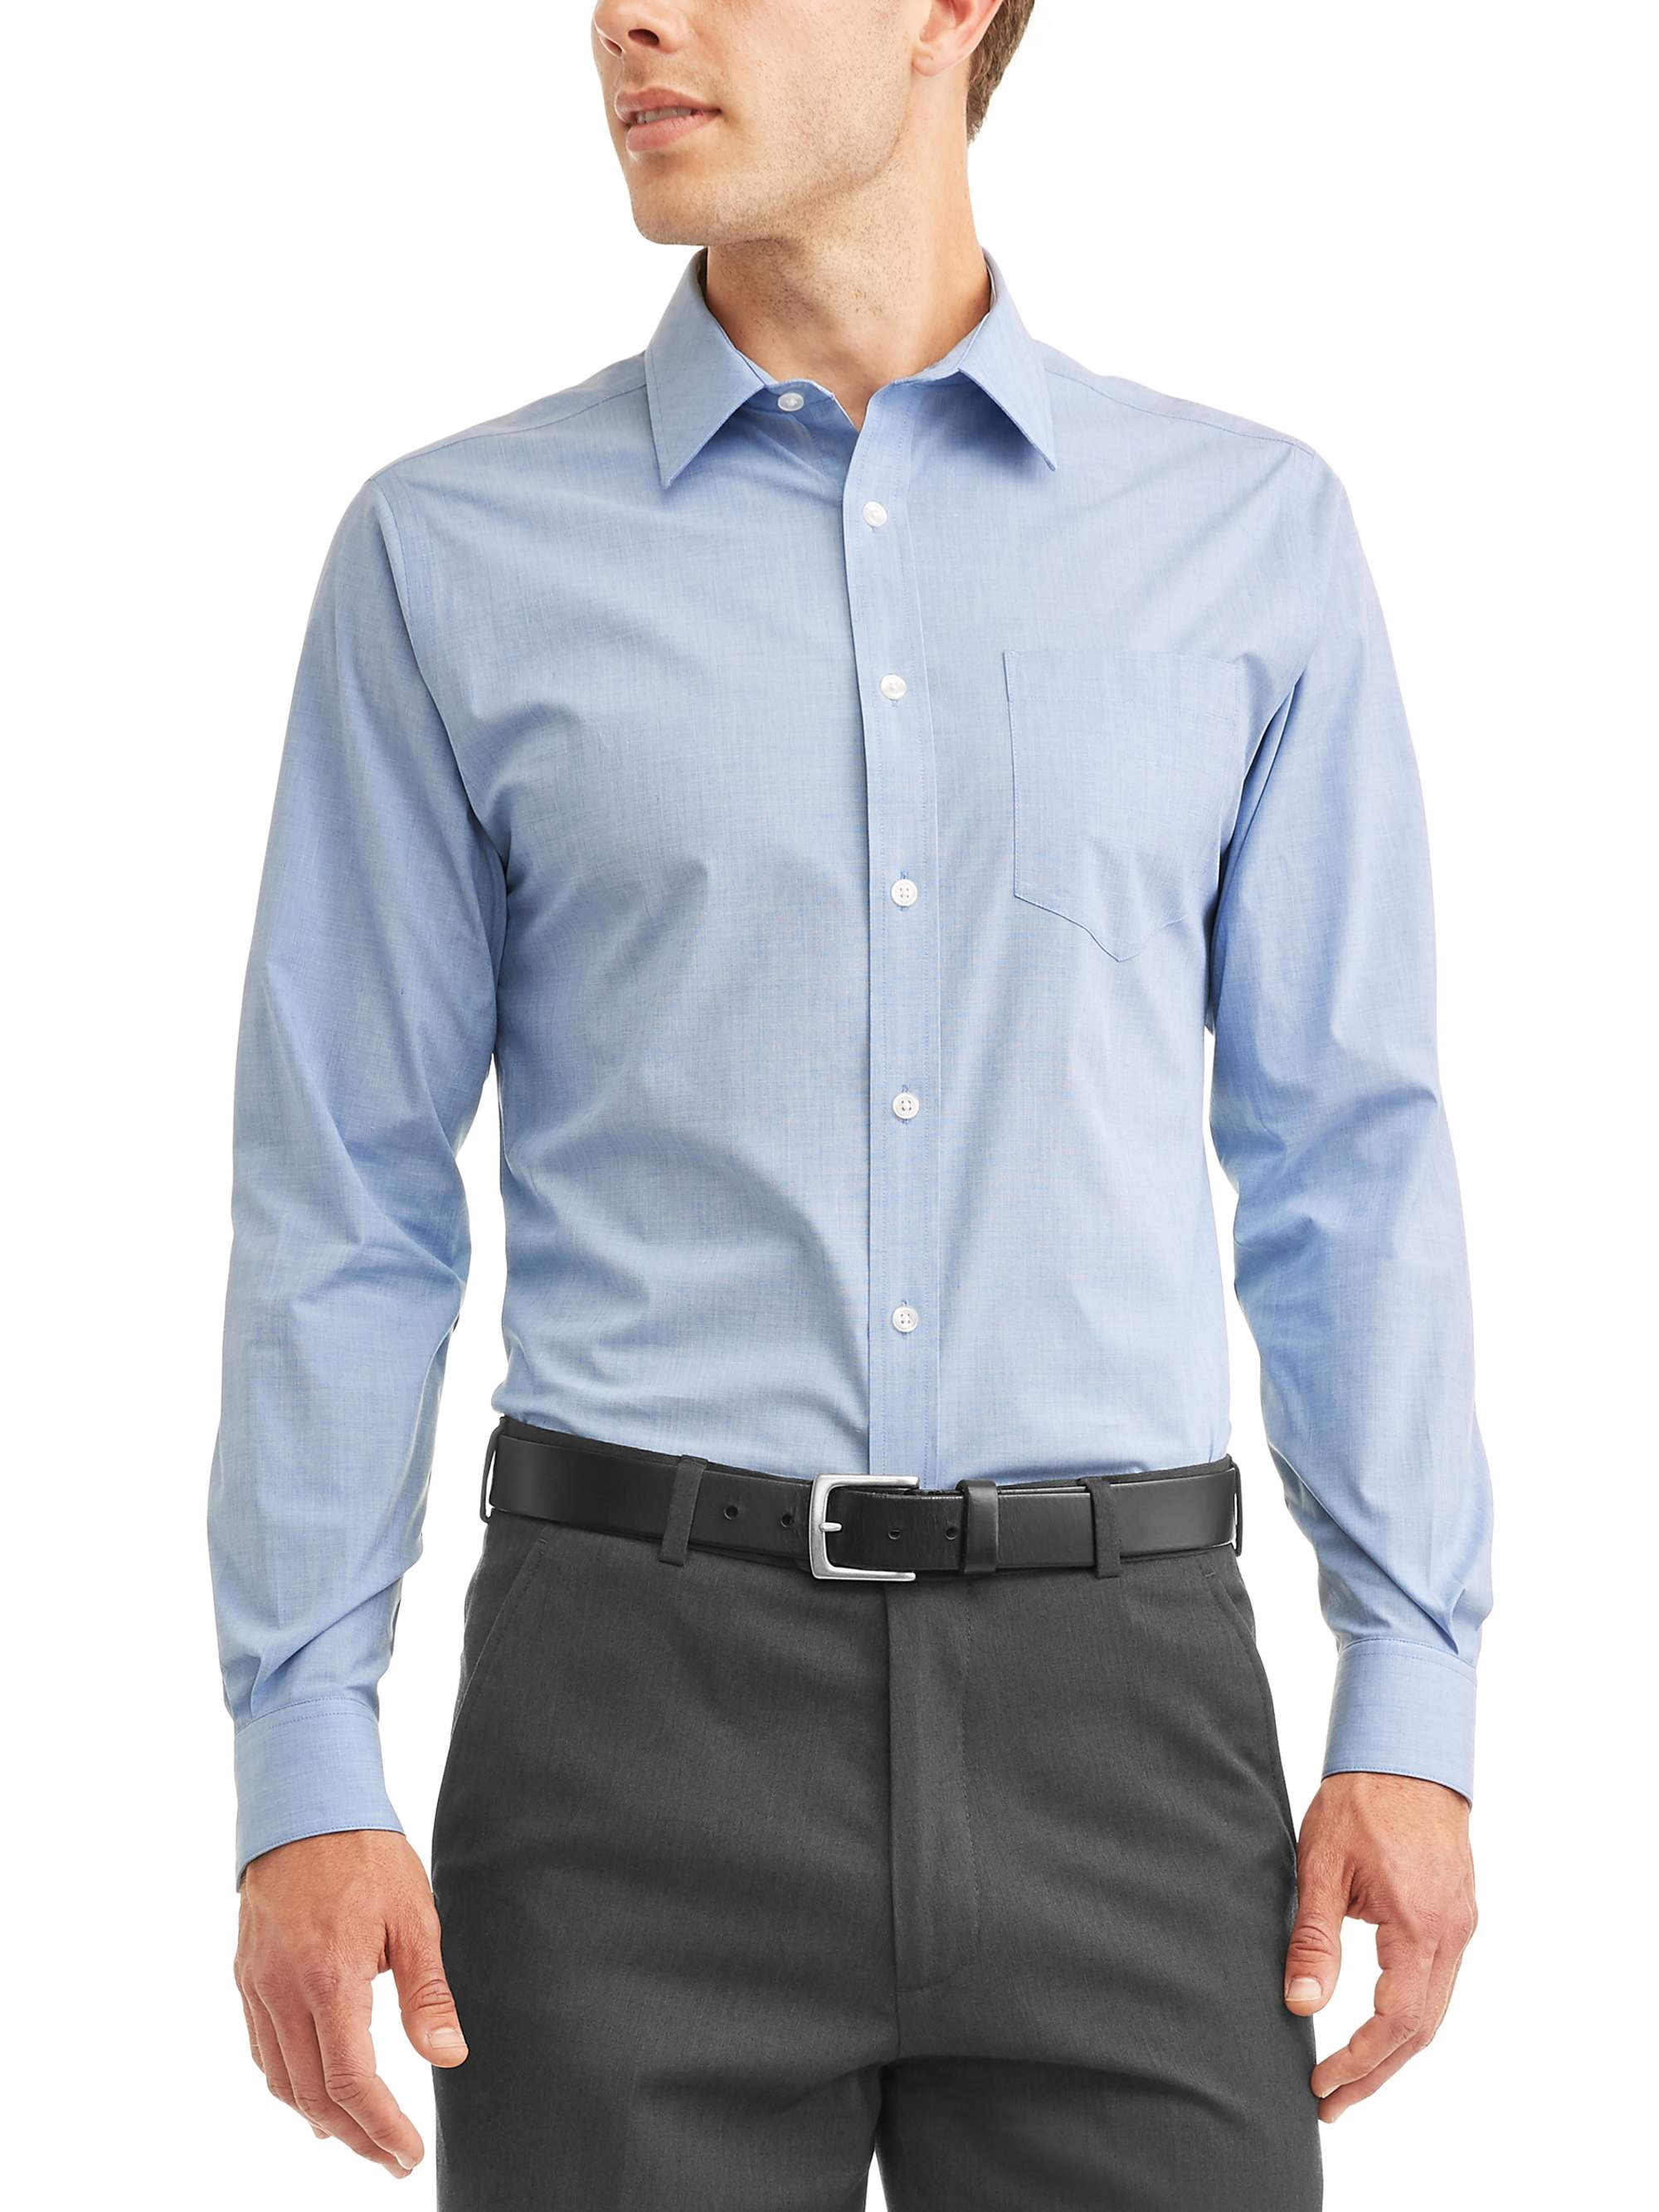 DY coperate Mens Long Sleeve Dress Shirt Litter Star Printed Shirt Slim Fit Tops Blouse Button Down